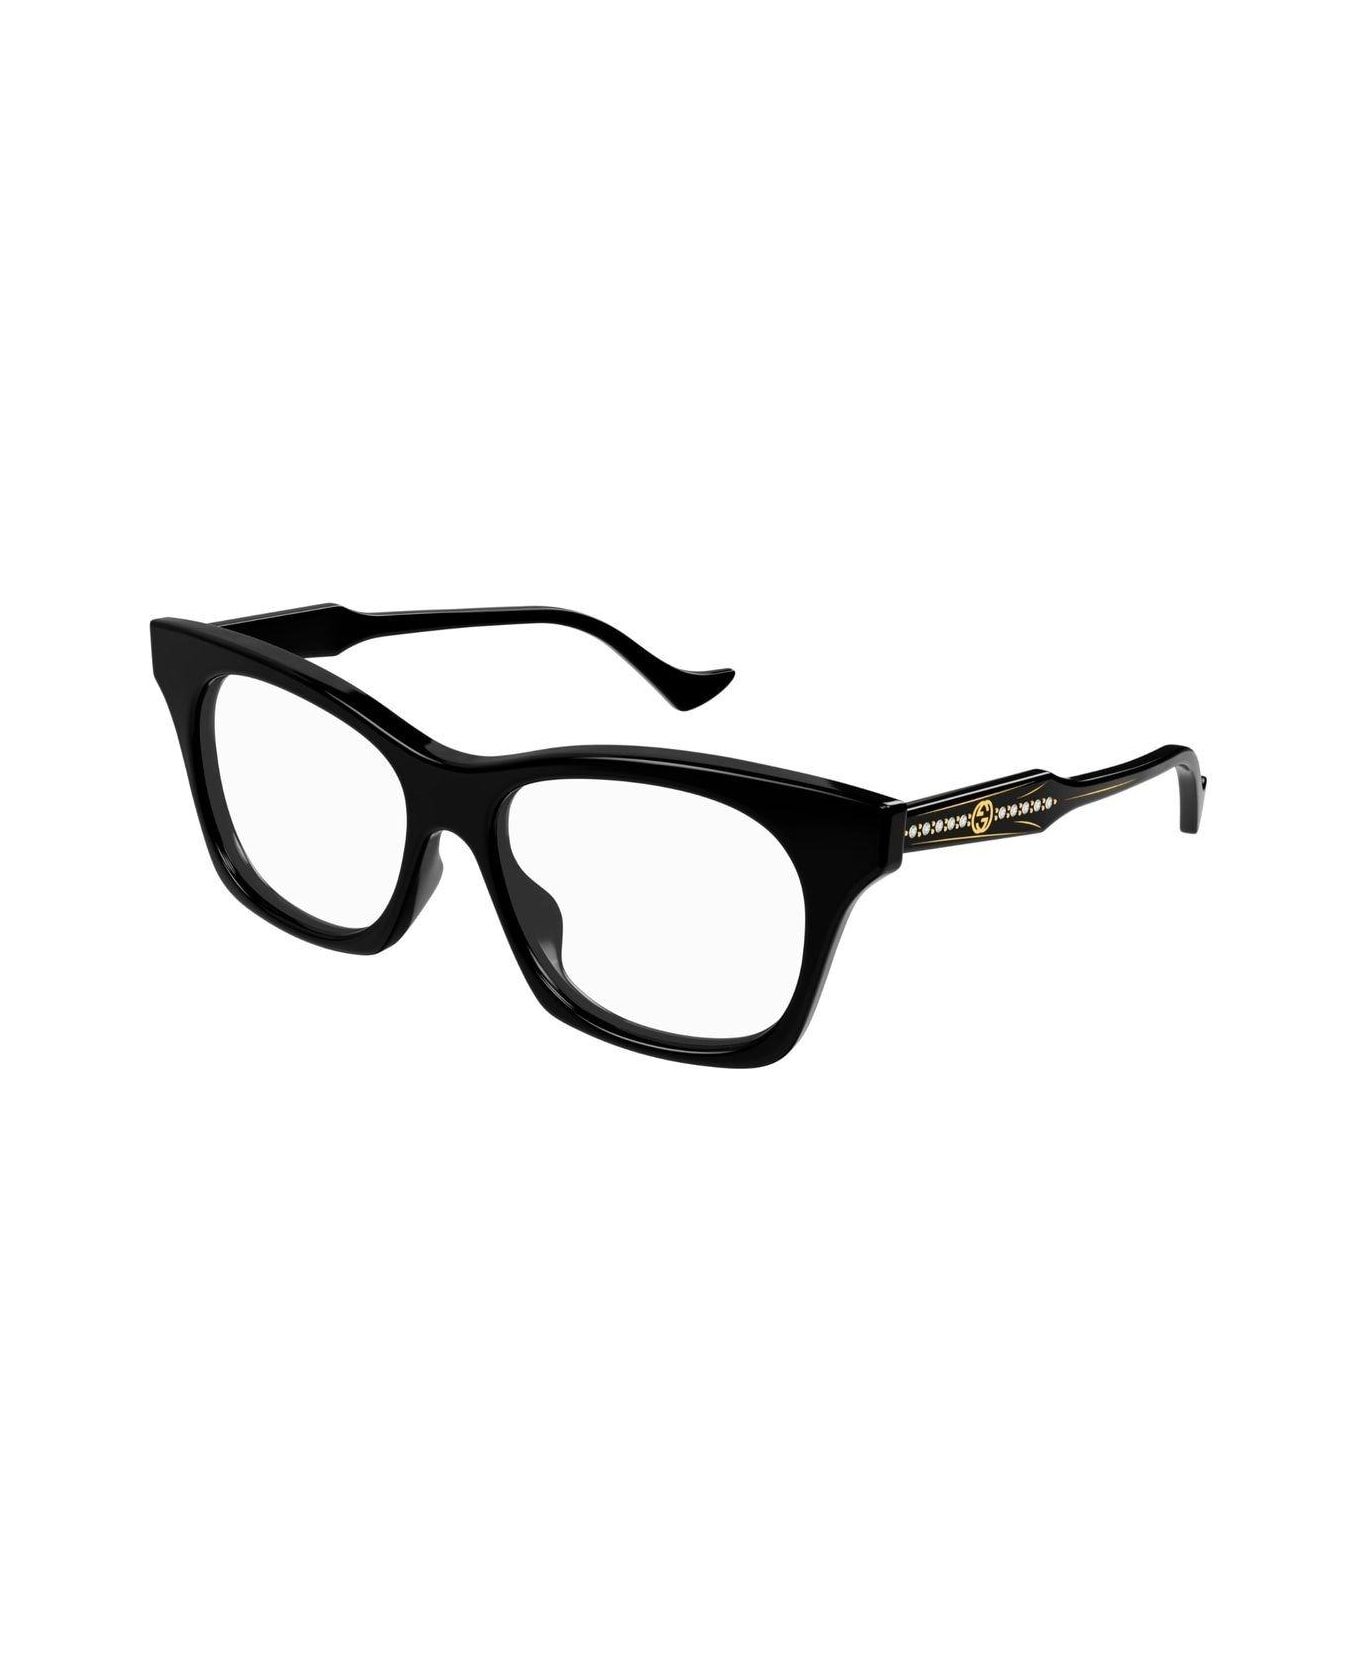 Gucci Eyewear Cat Eye Frame Glasses Glasses - 001 BLACK BLACK TRANSPARENT